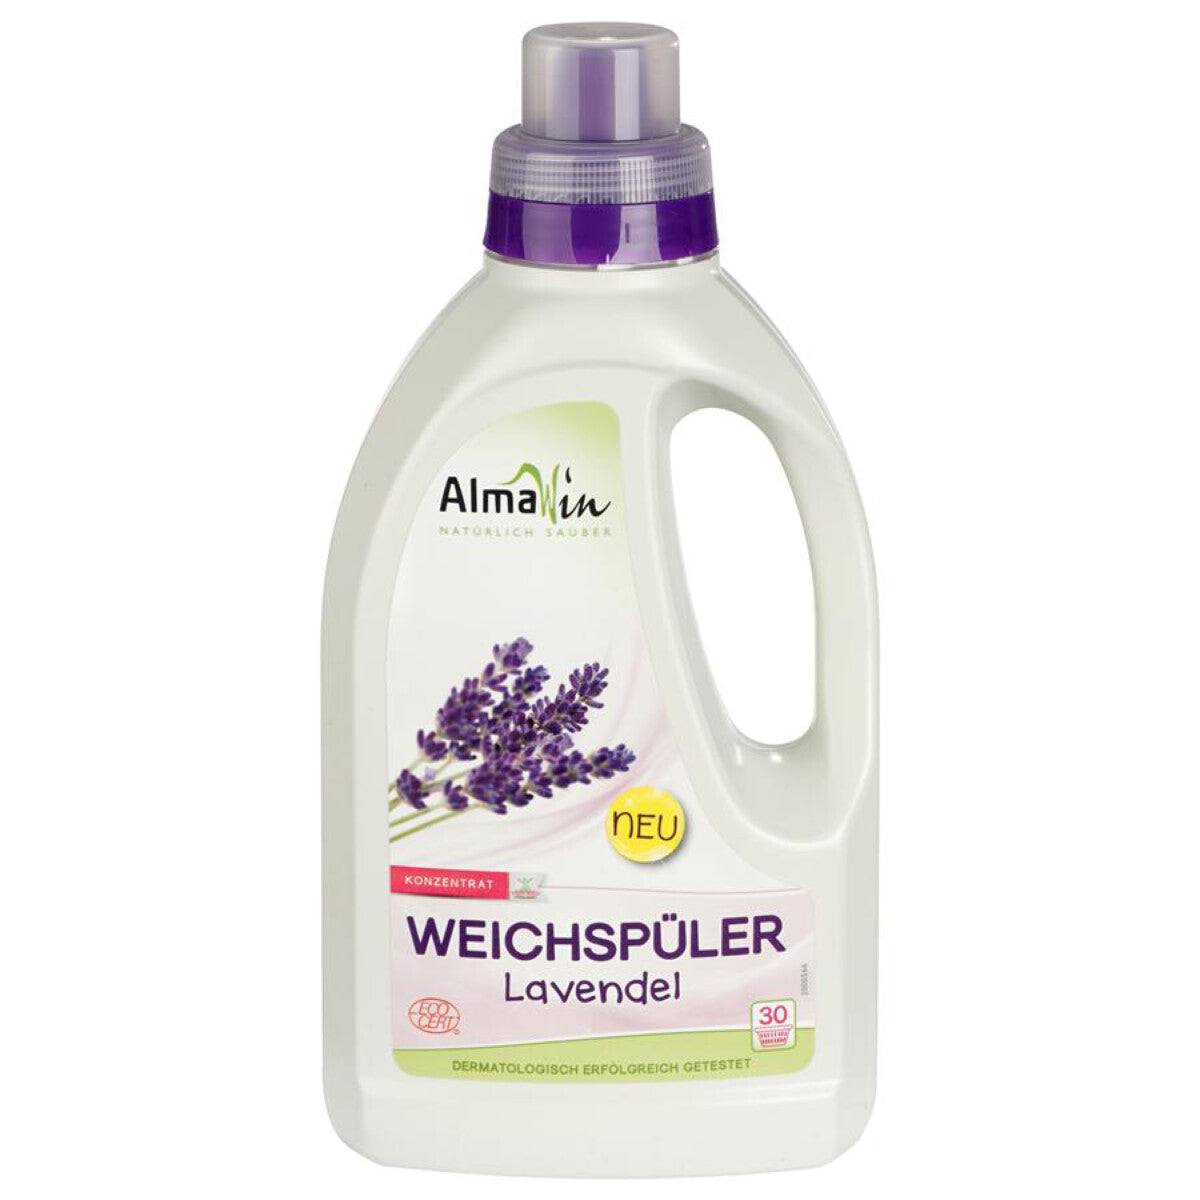 ALMA WIN Weichspüler Lavendel - 750 ml